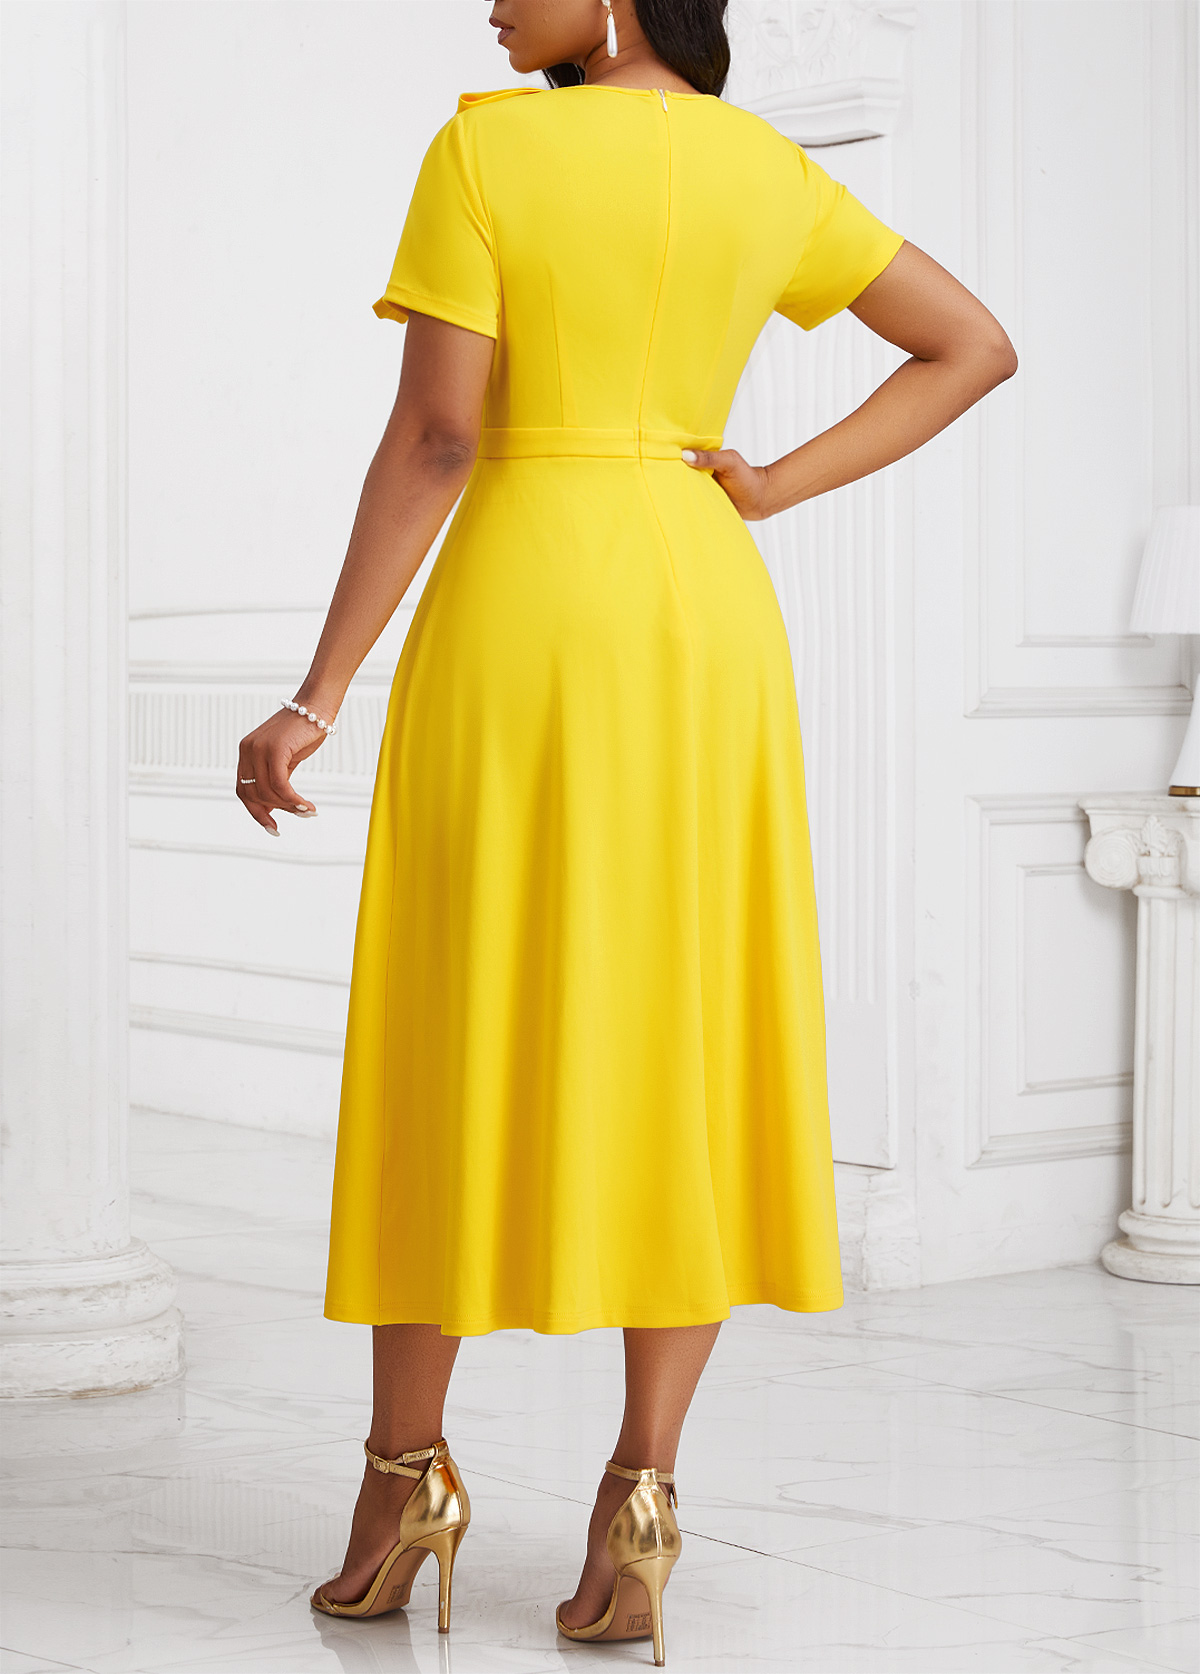 Zipper Yellow Short Sleeve Asymmetrical Neck Dress